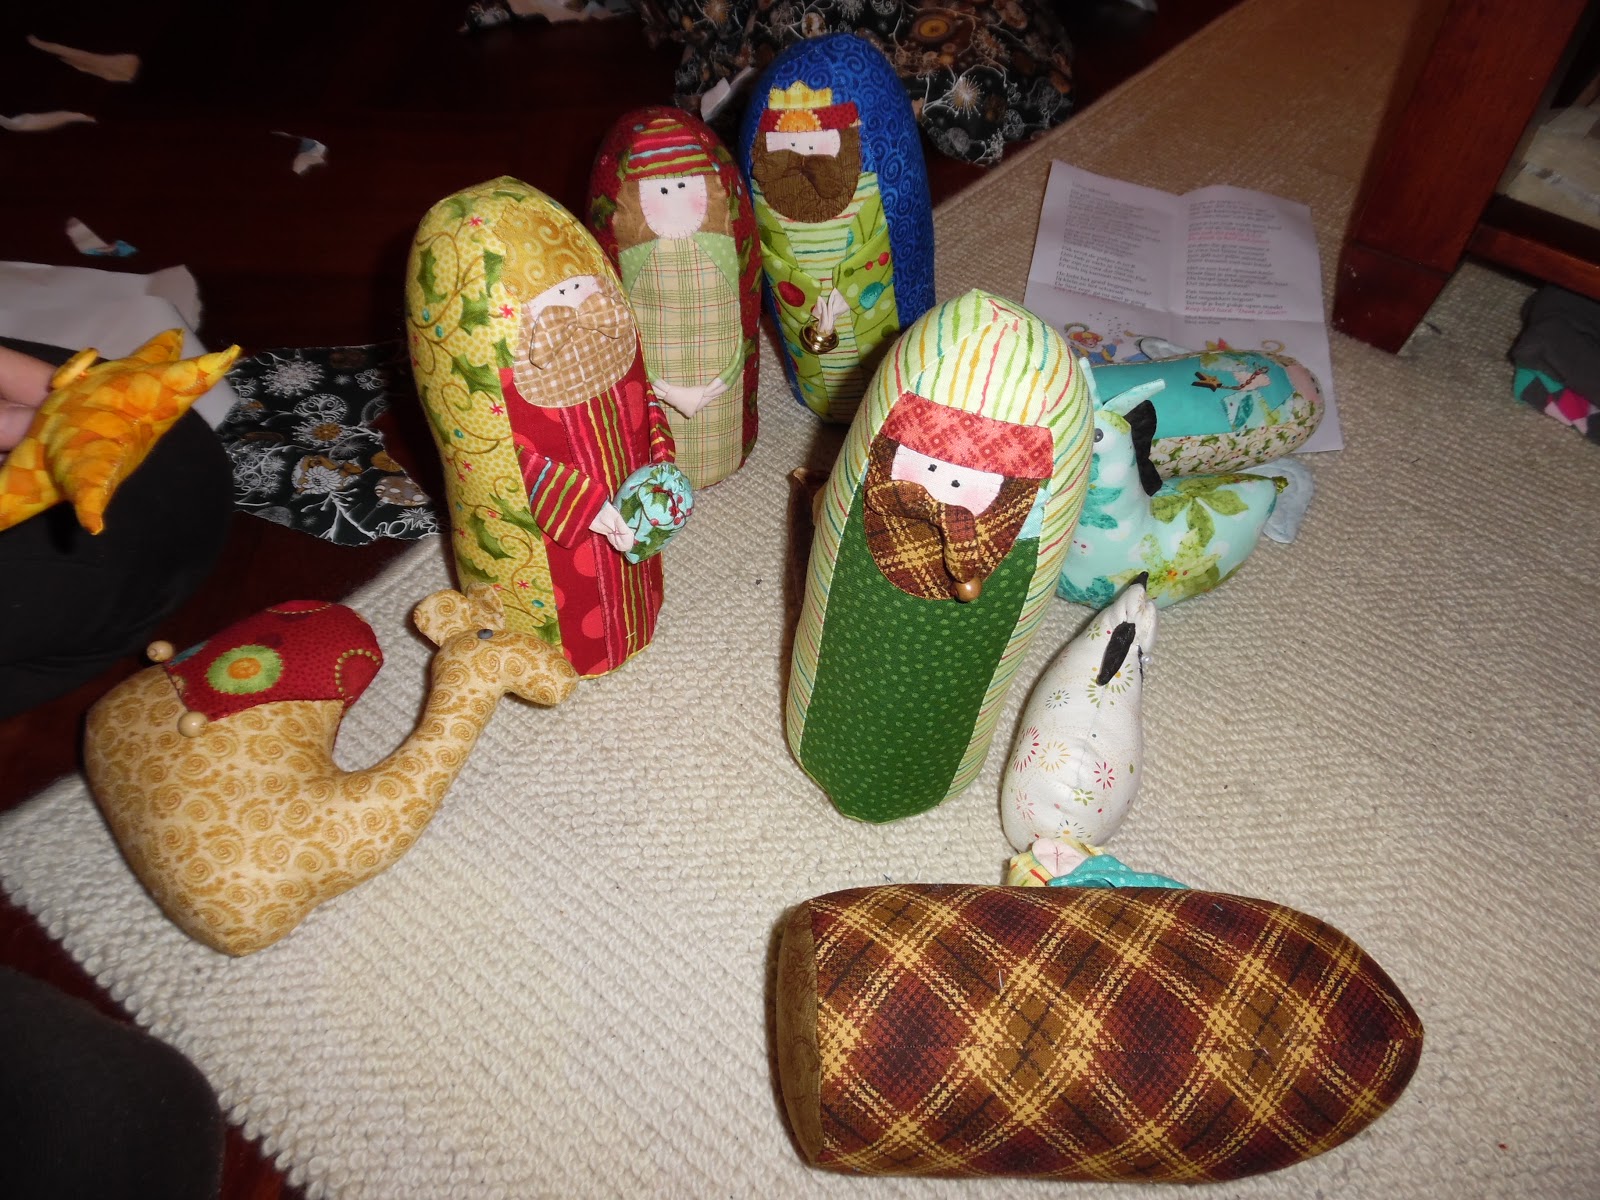 Homemade Nativity scene!